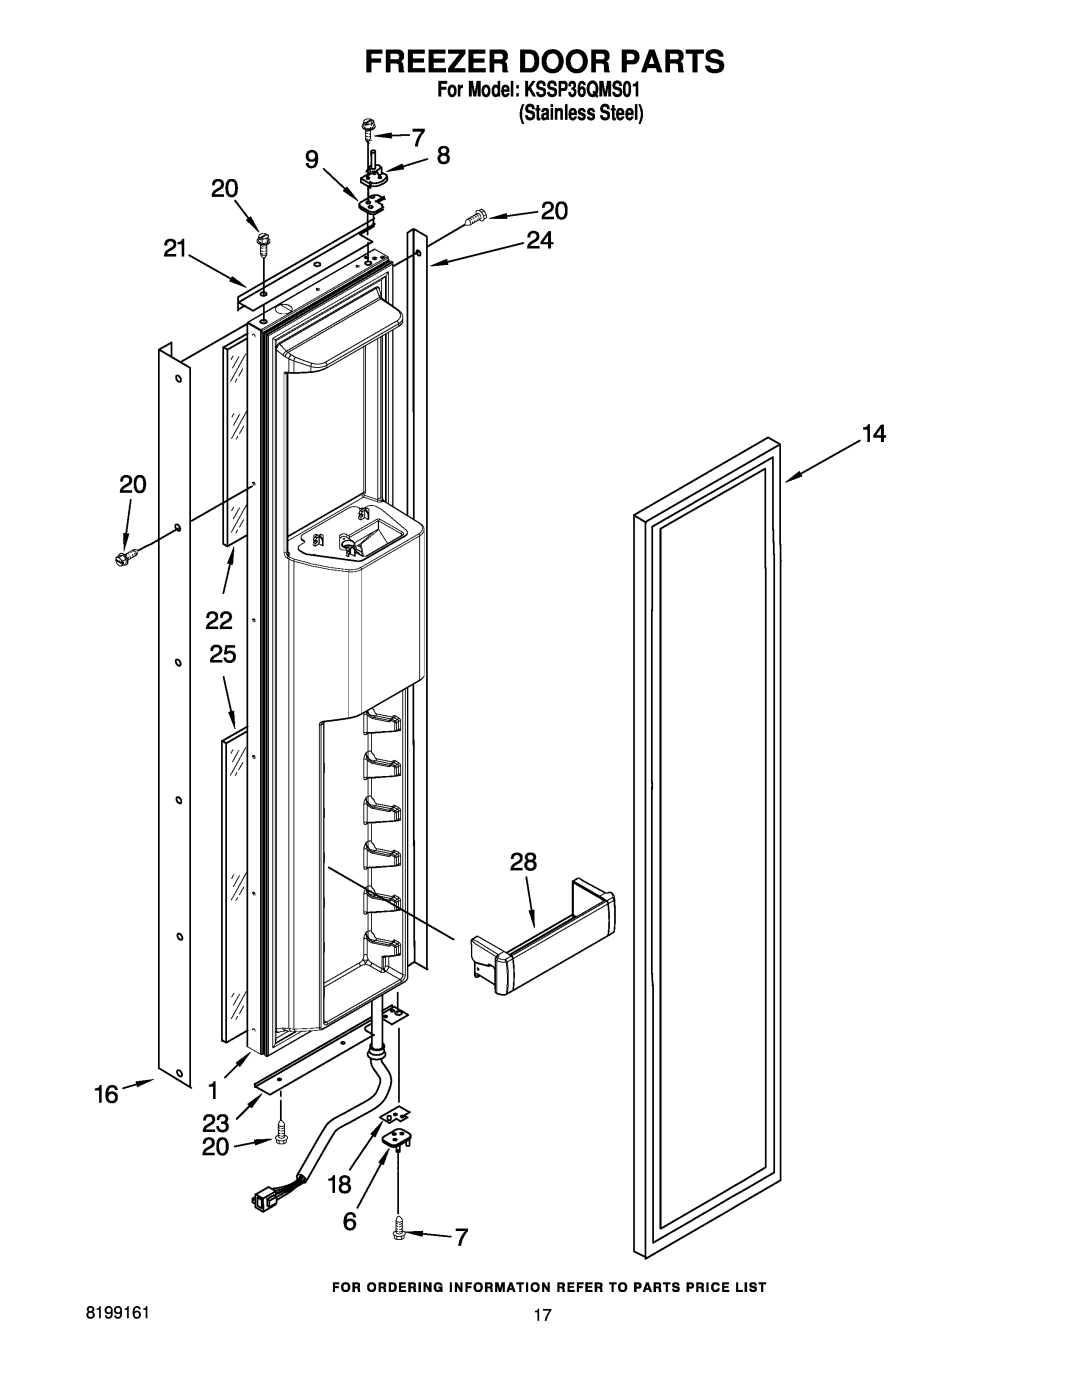 KitchenAid manual Freezer Door Parts, For Model KSSP36QMS01 Stainless Steel 